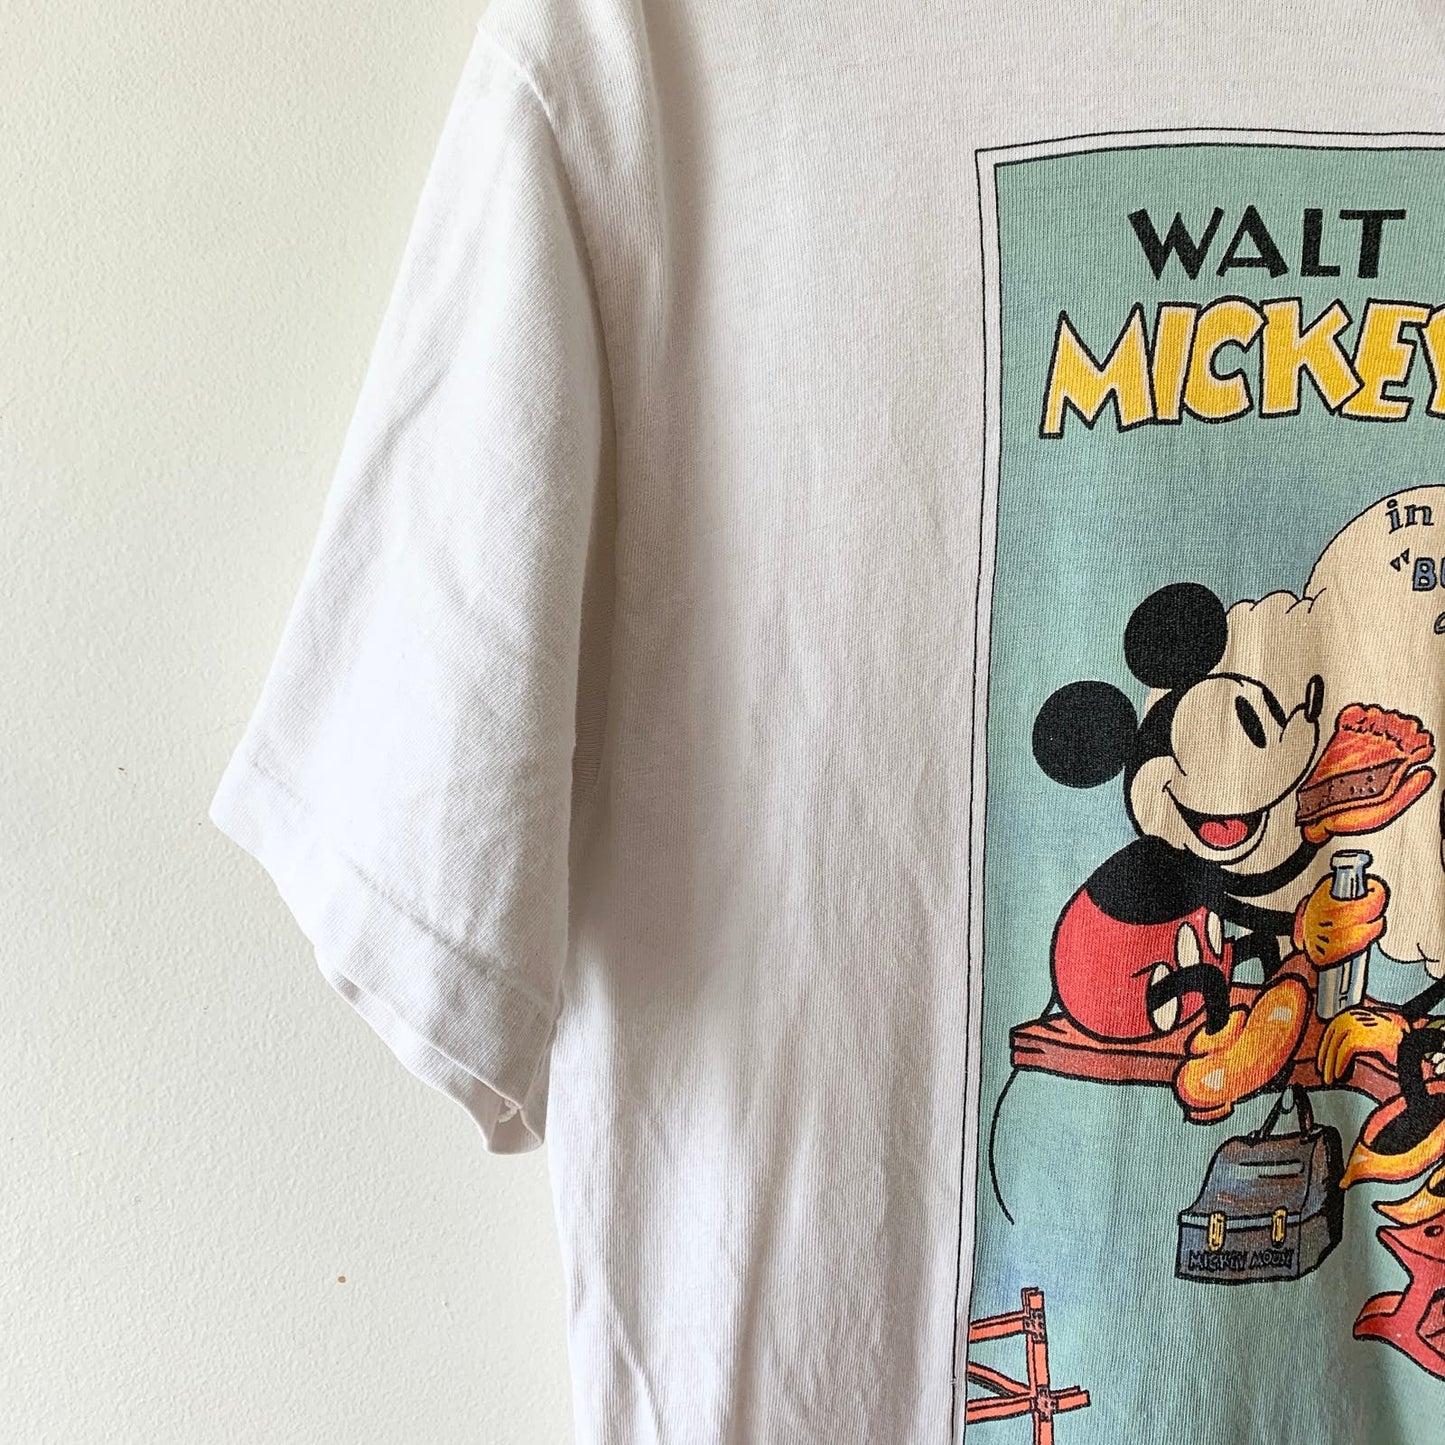 DISNEY Vintage Mickey Building a Building Graphic T-Shirt L-XL